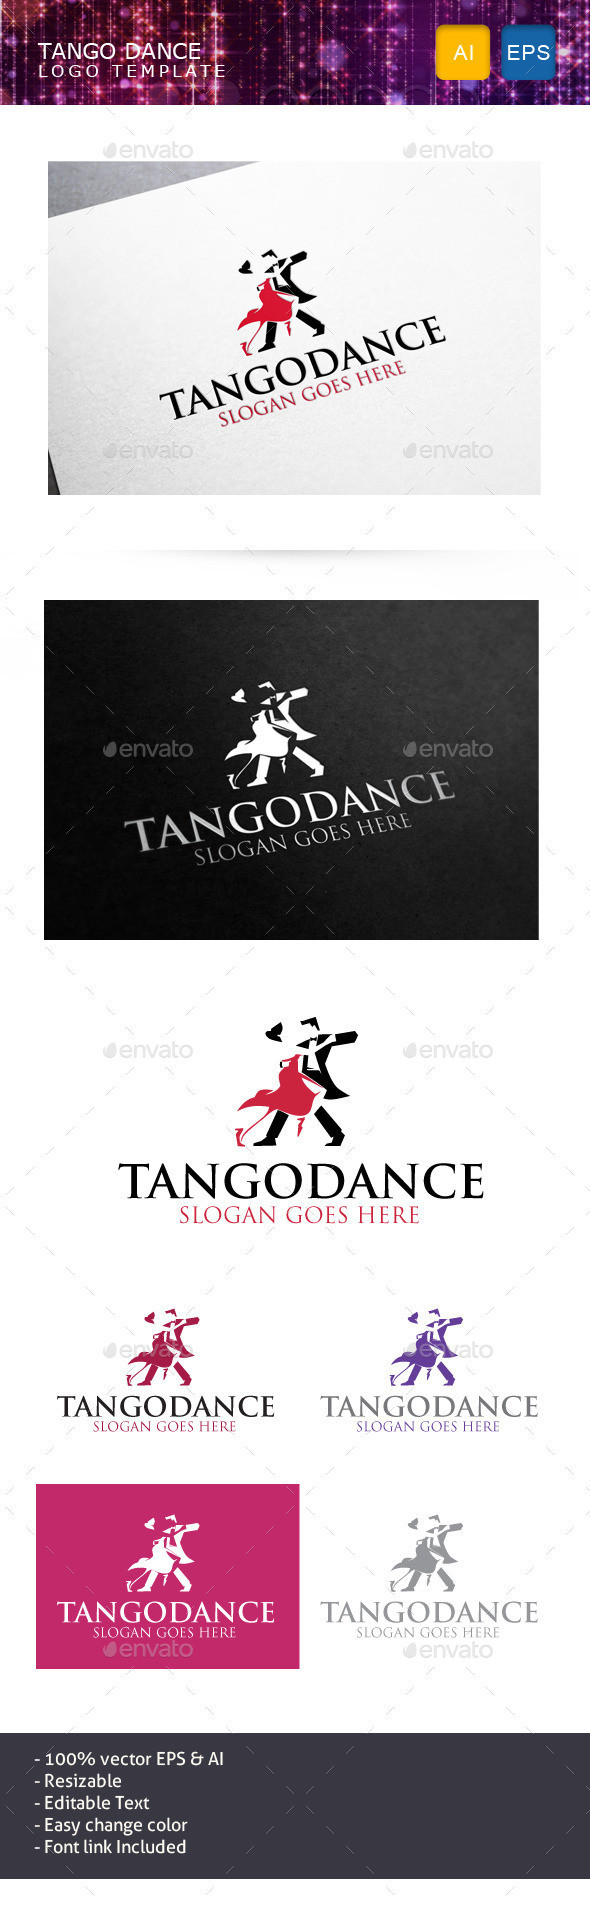 Tangodance preview